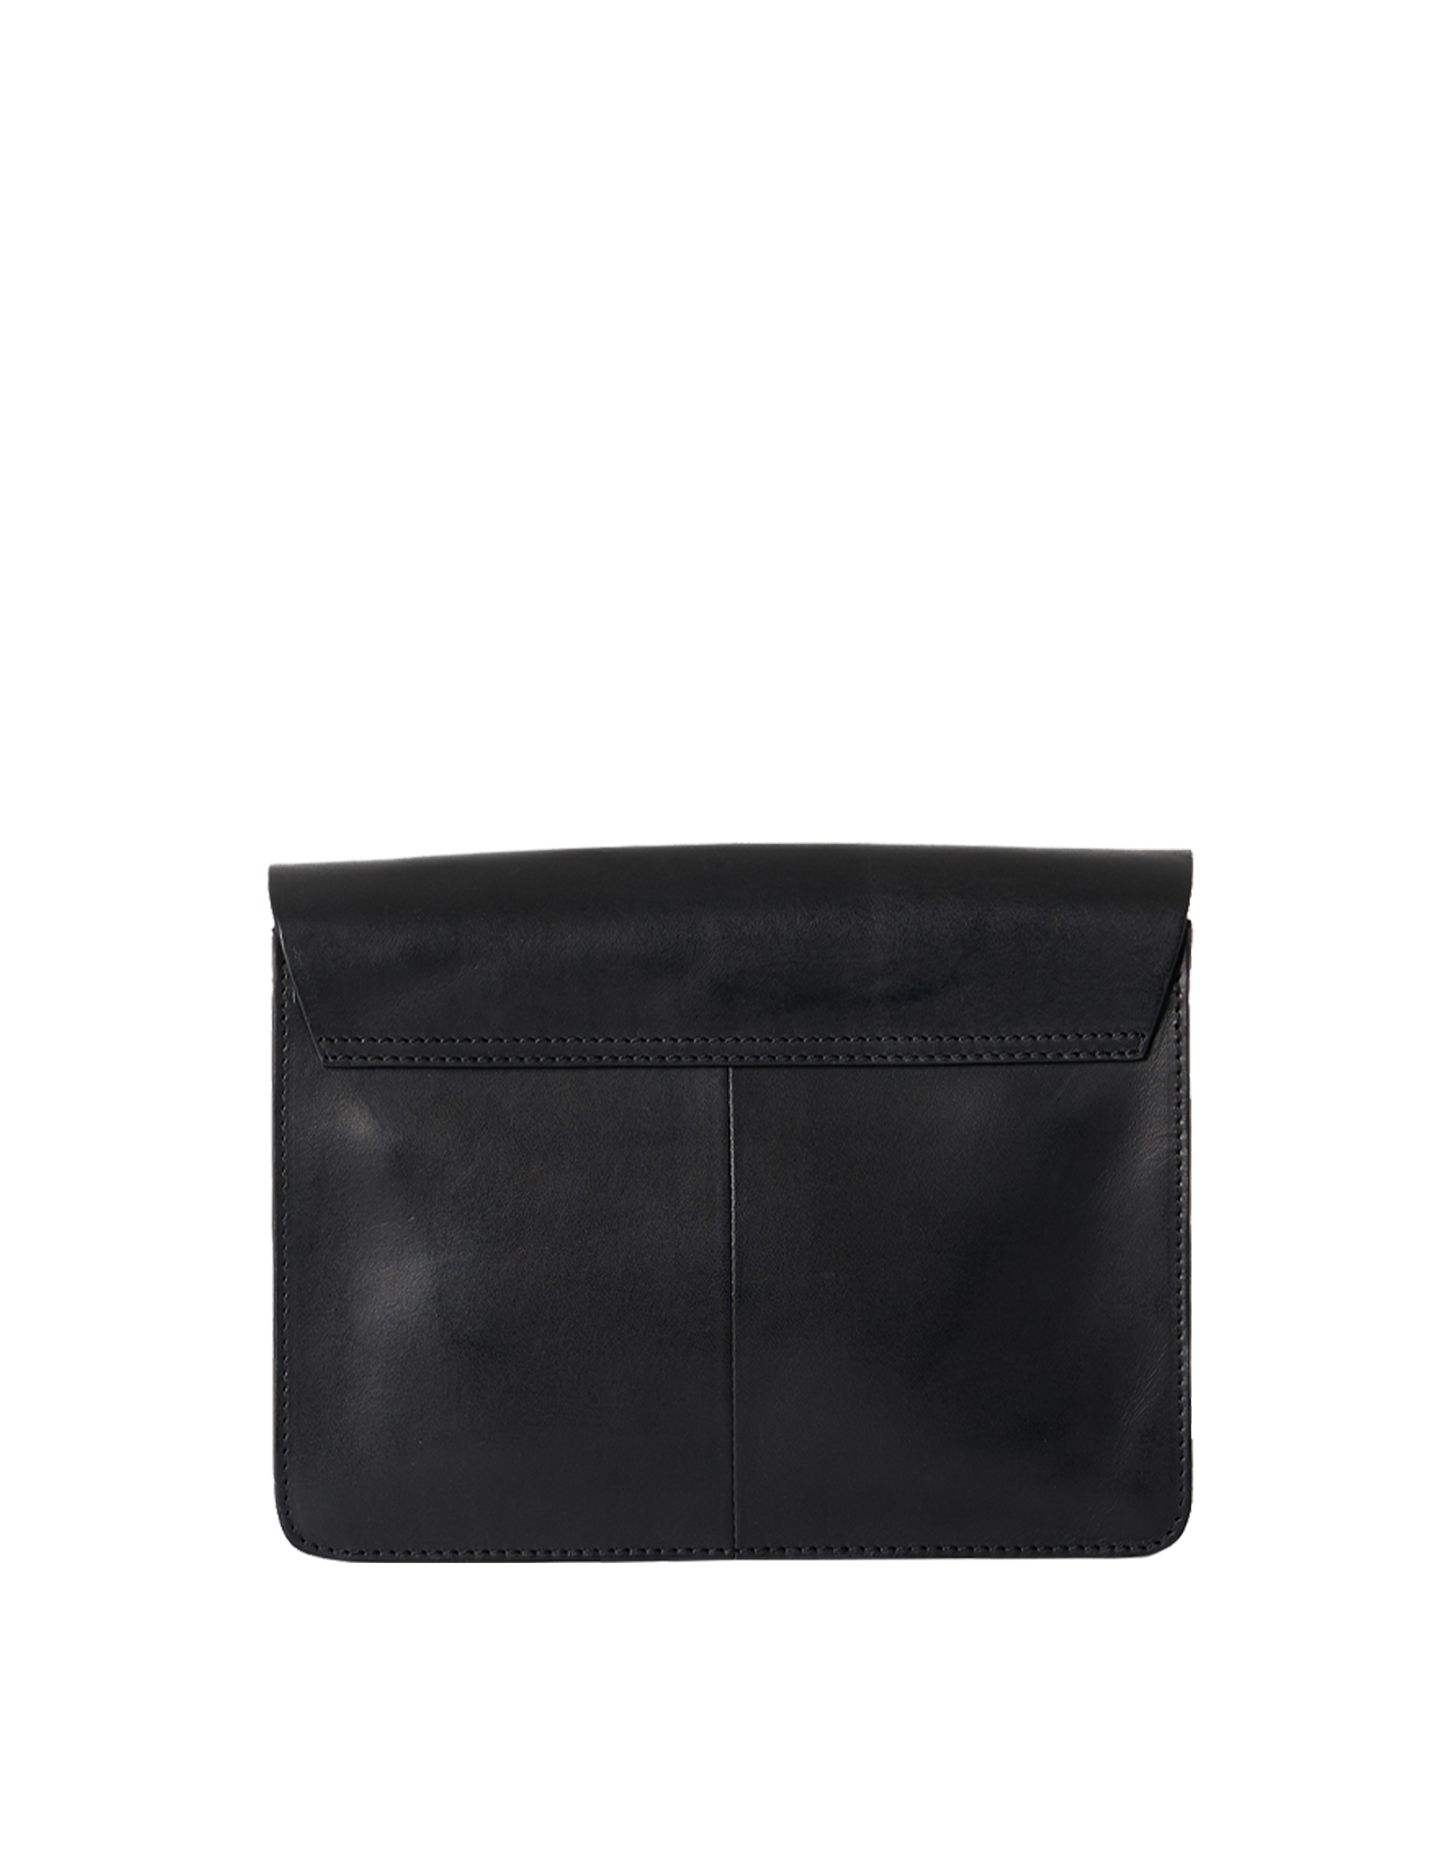 Audrey Black Classic Leather